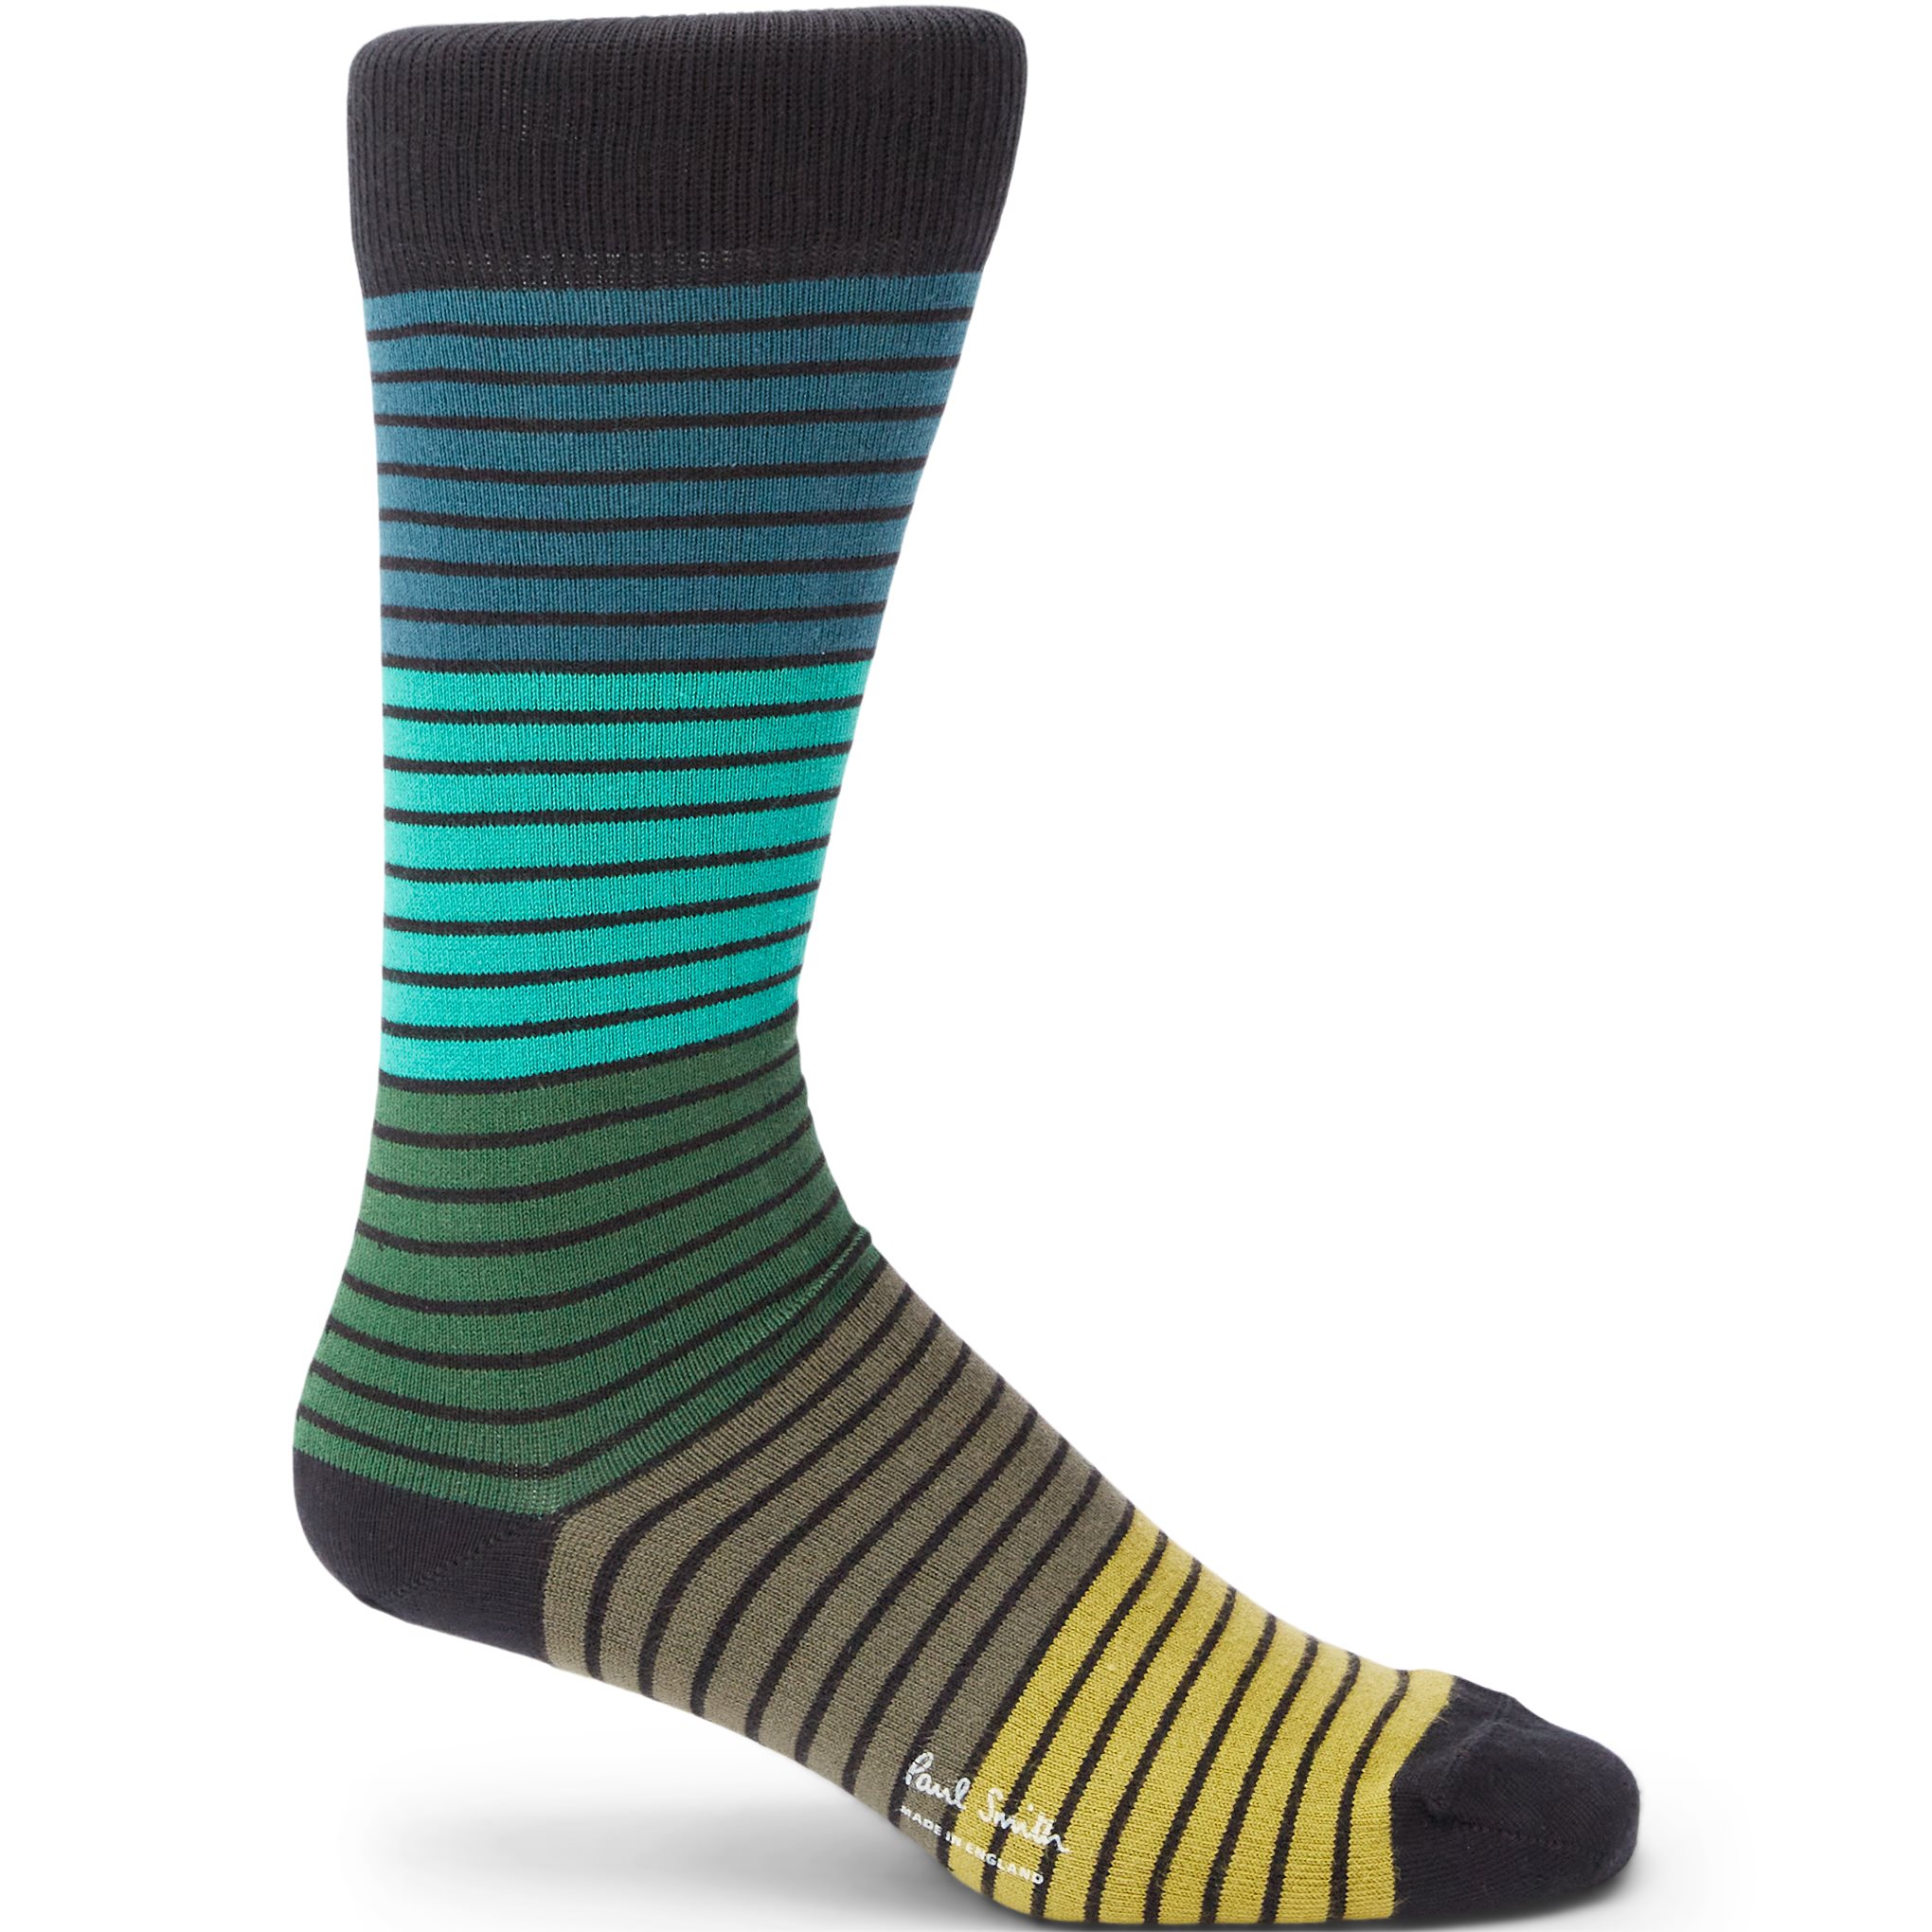 Socks - Green